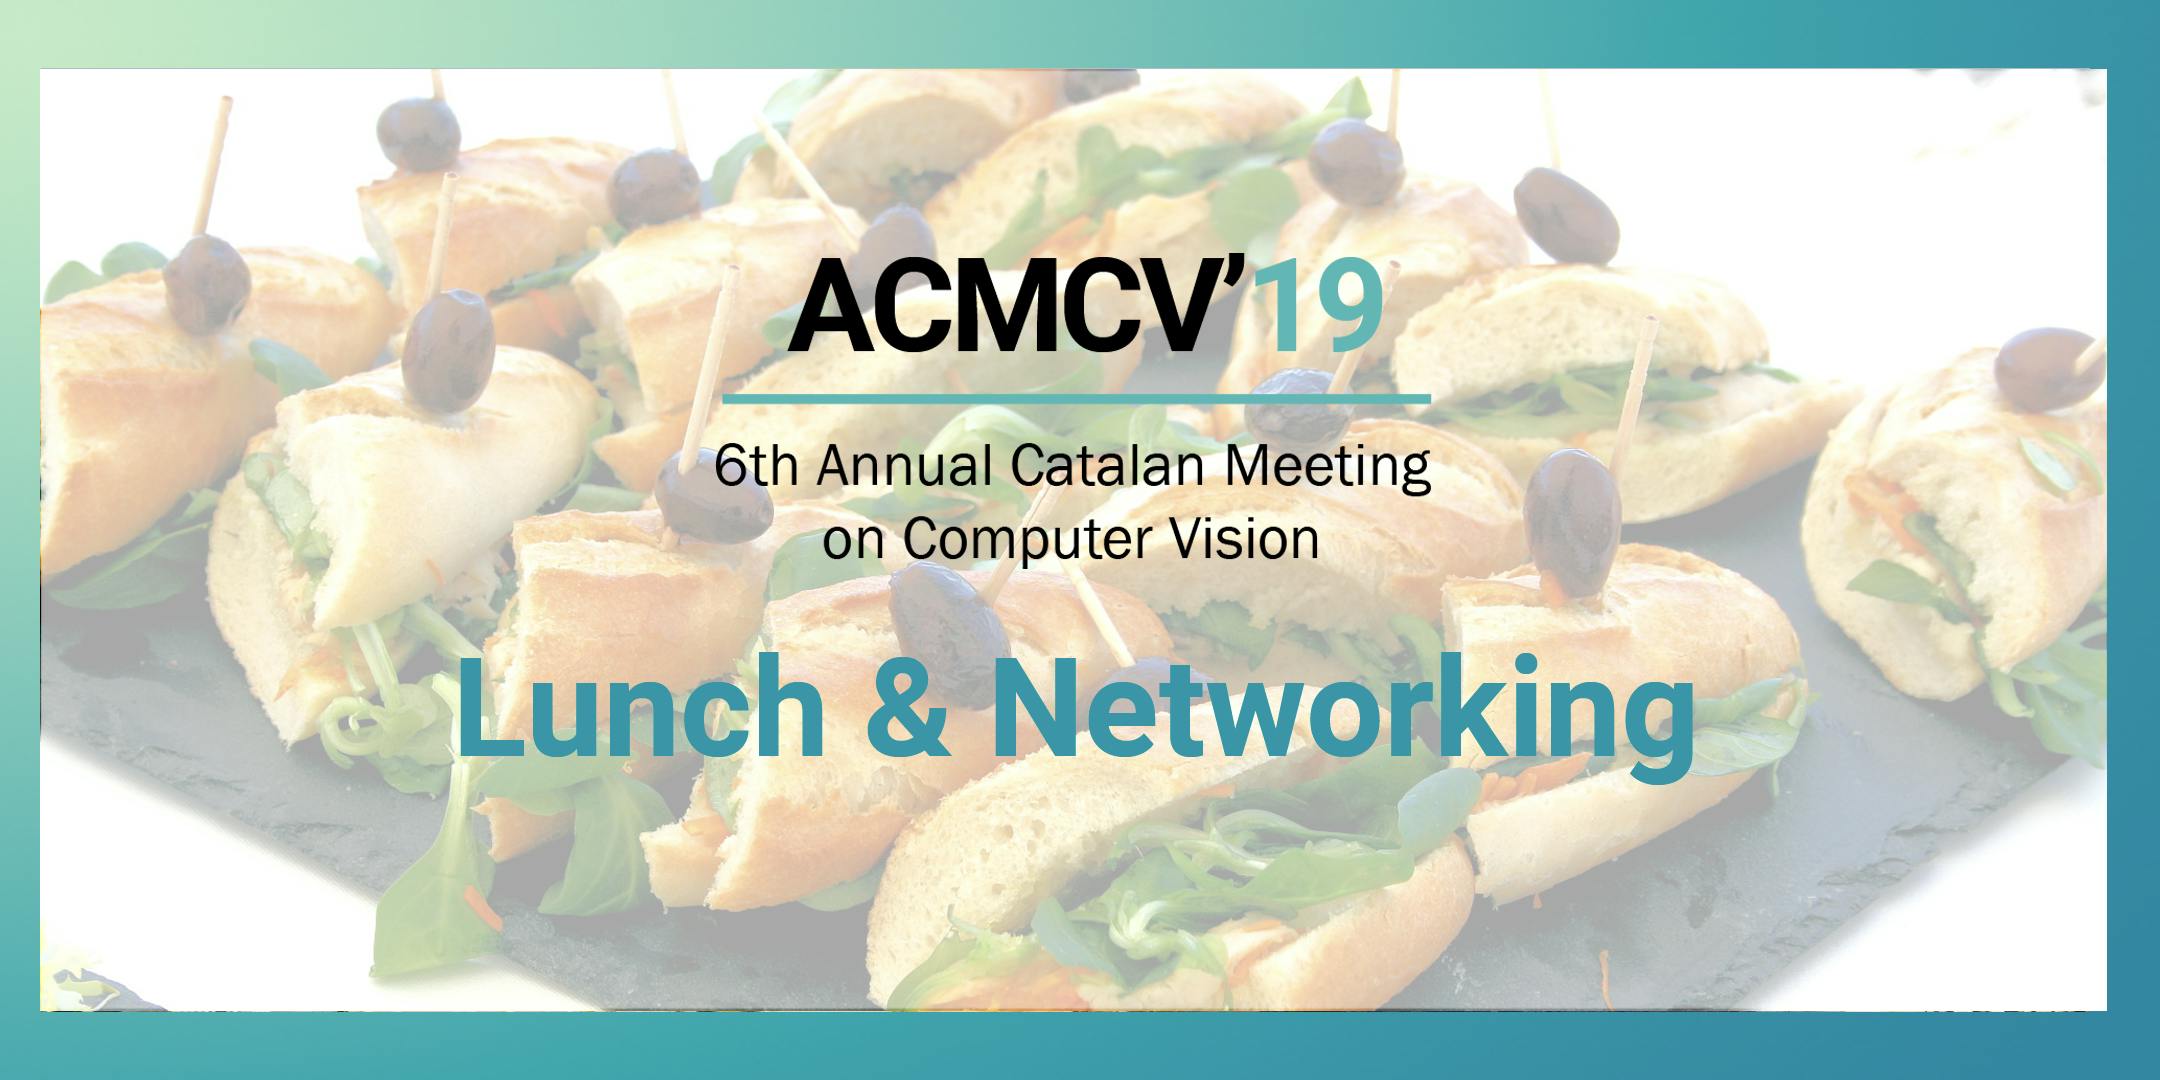 ACMCV2019 Lunch & Networking